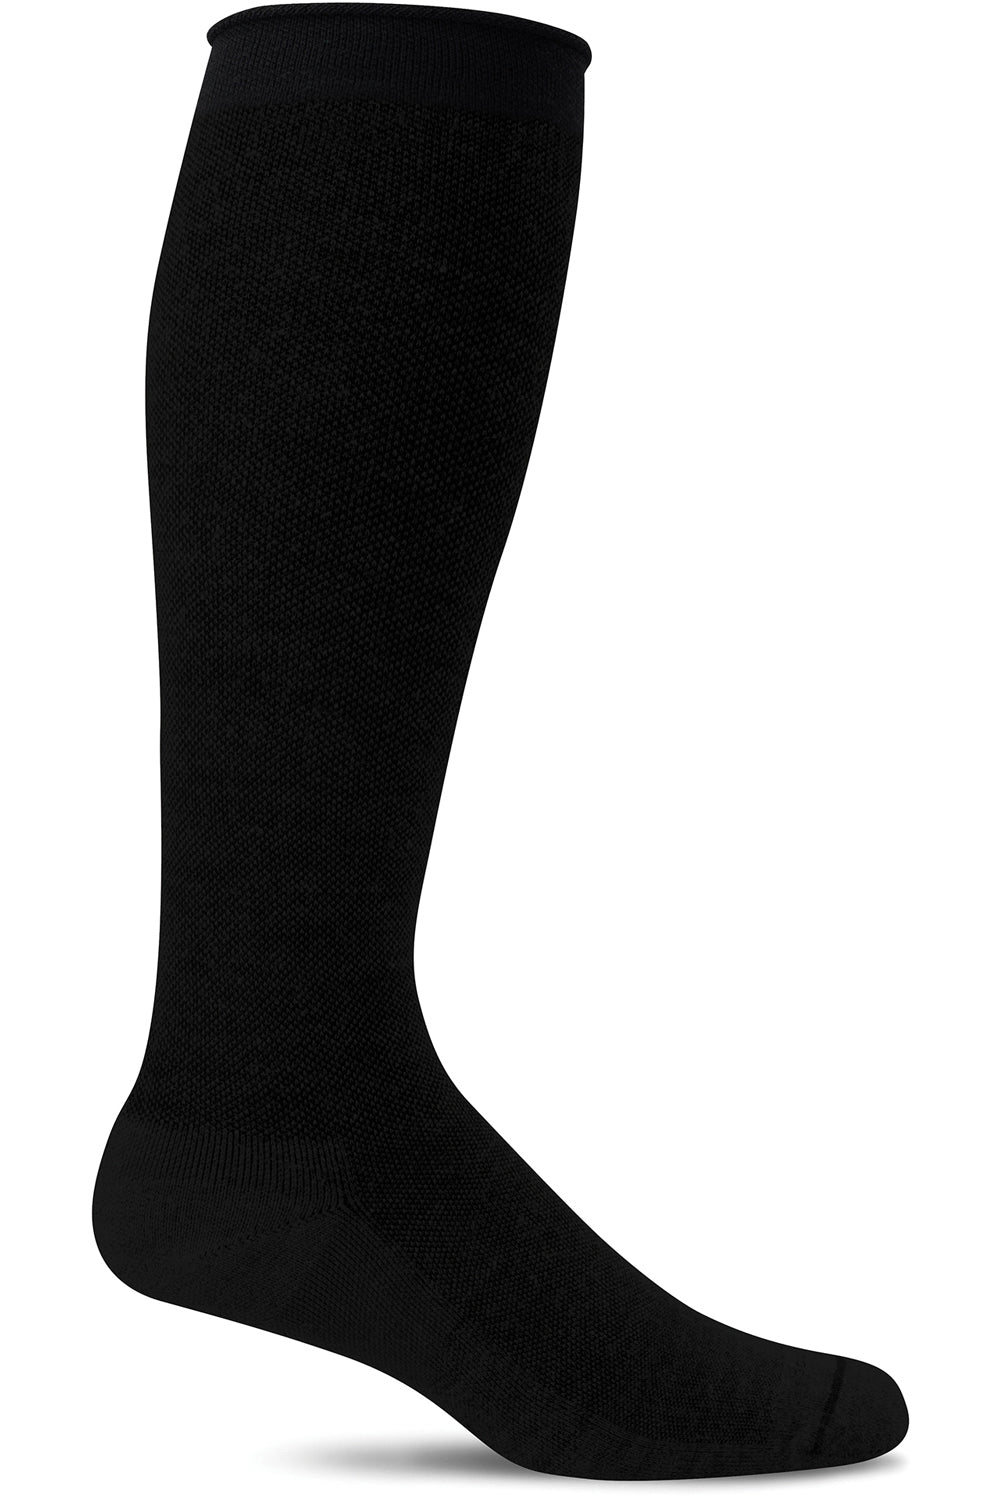 Sockwell Women's Orbital Stripe Sock in Black color from the side